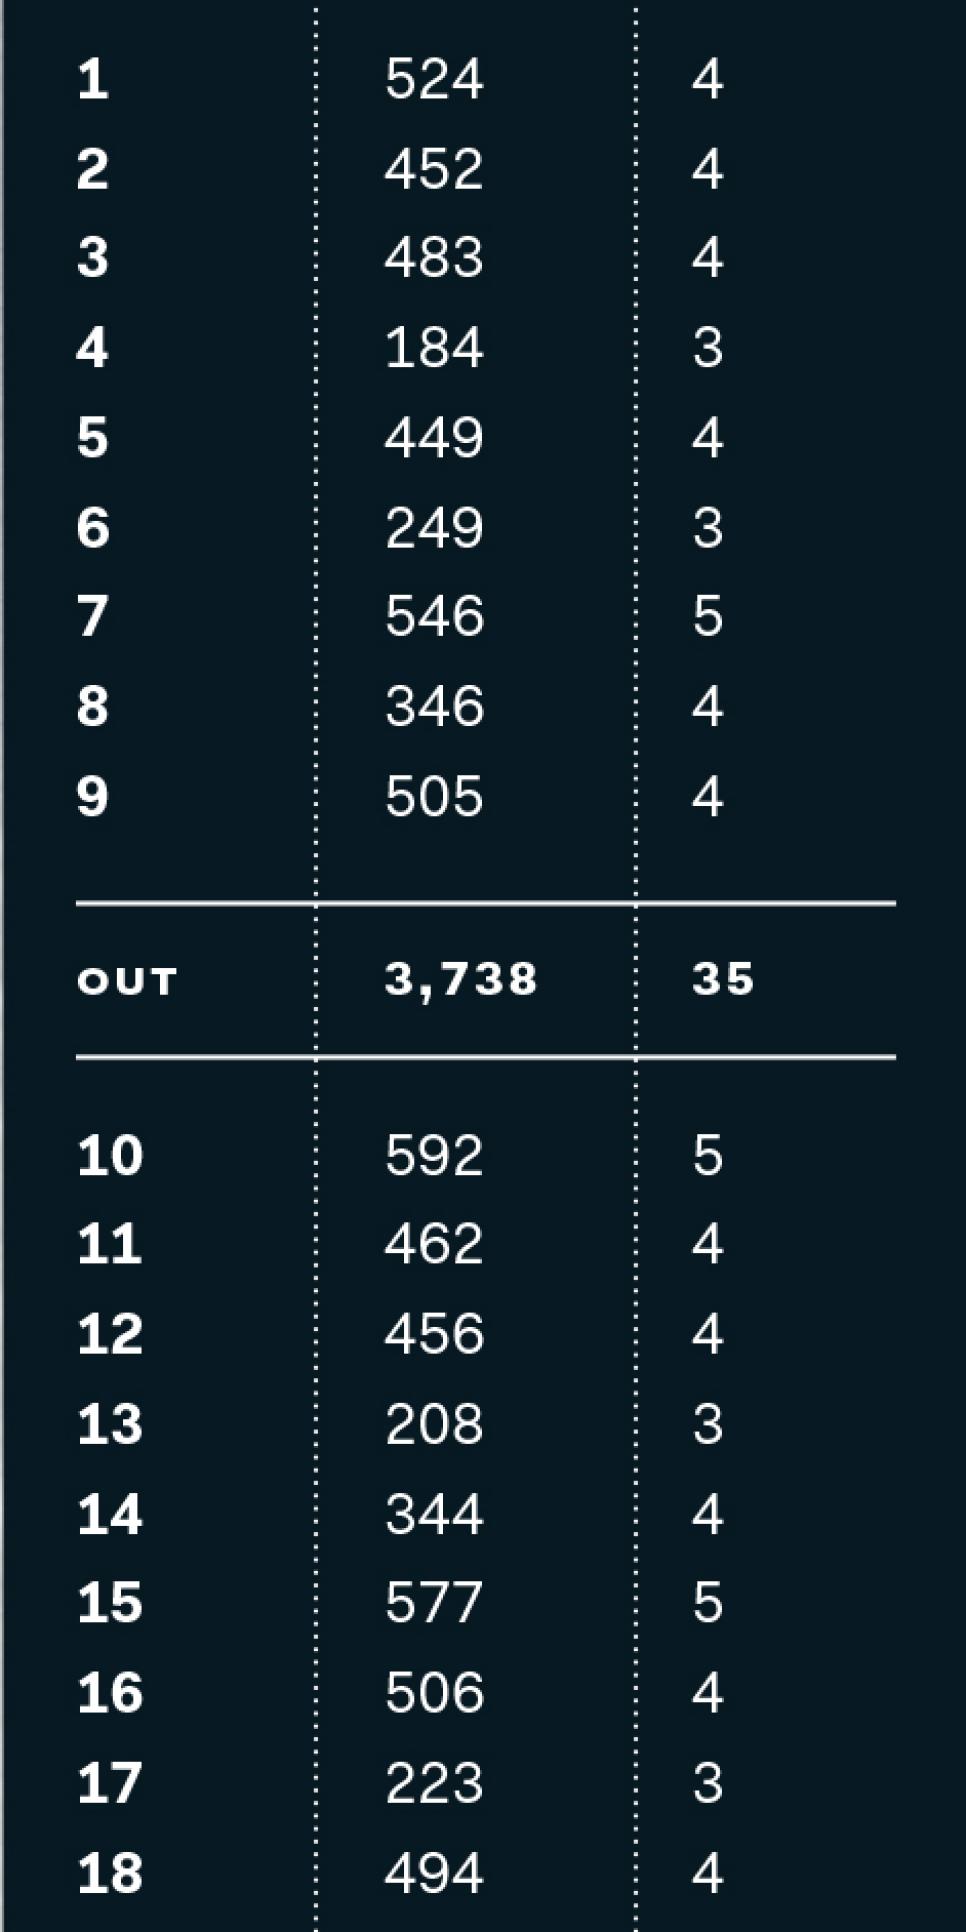 Quail-Hollow-Club-yardage-stats.jpg